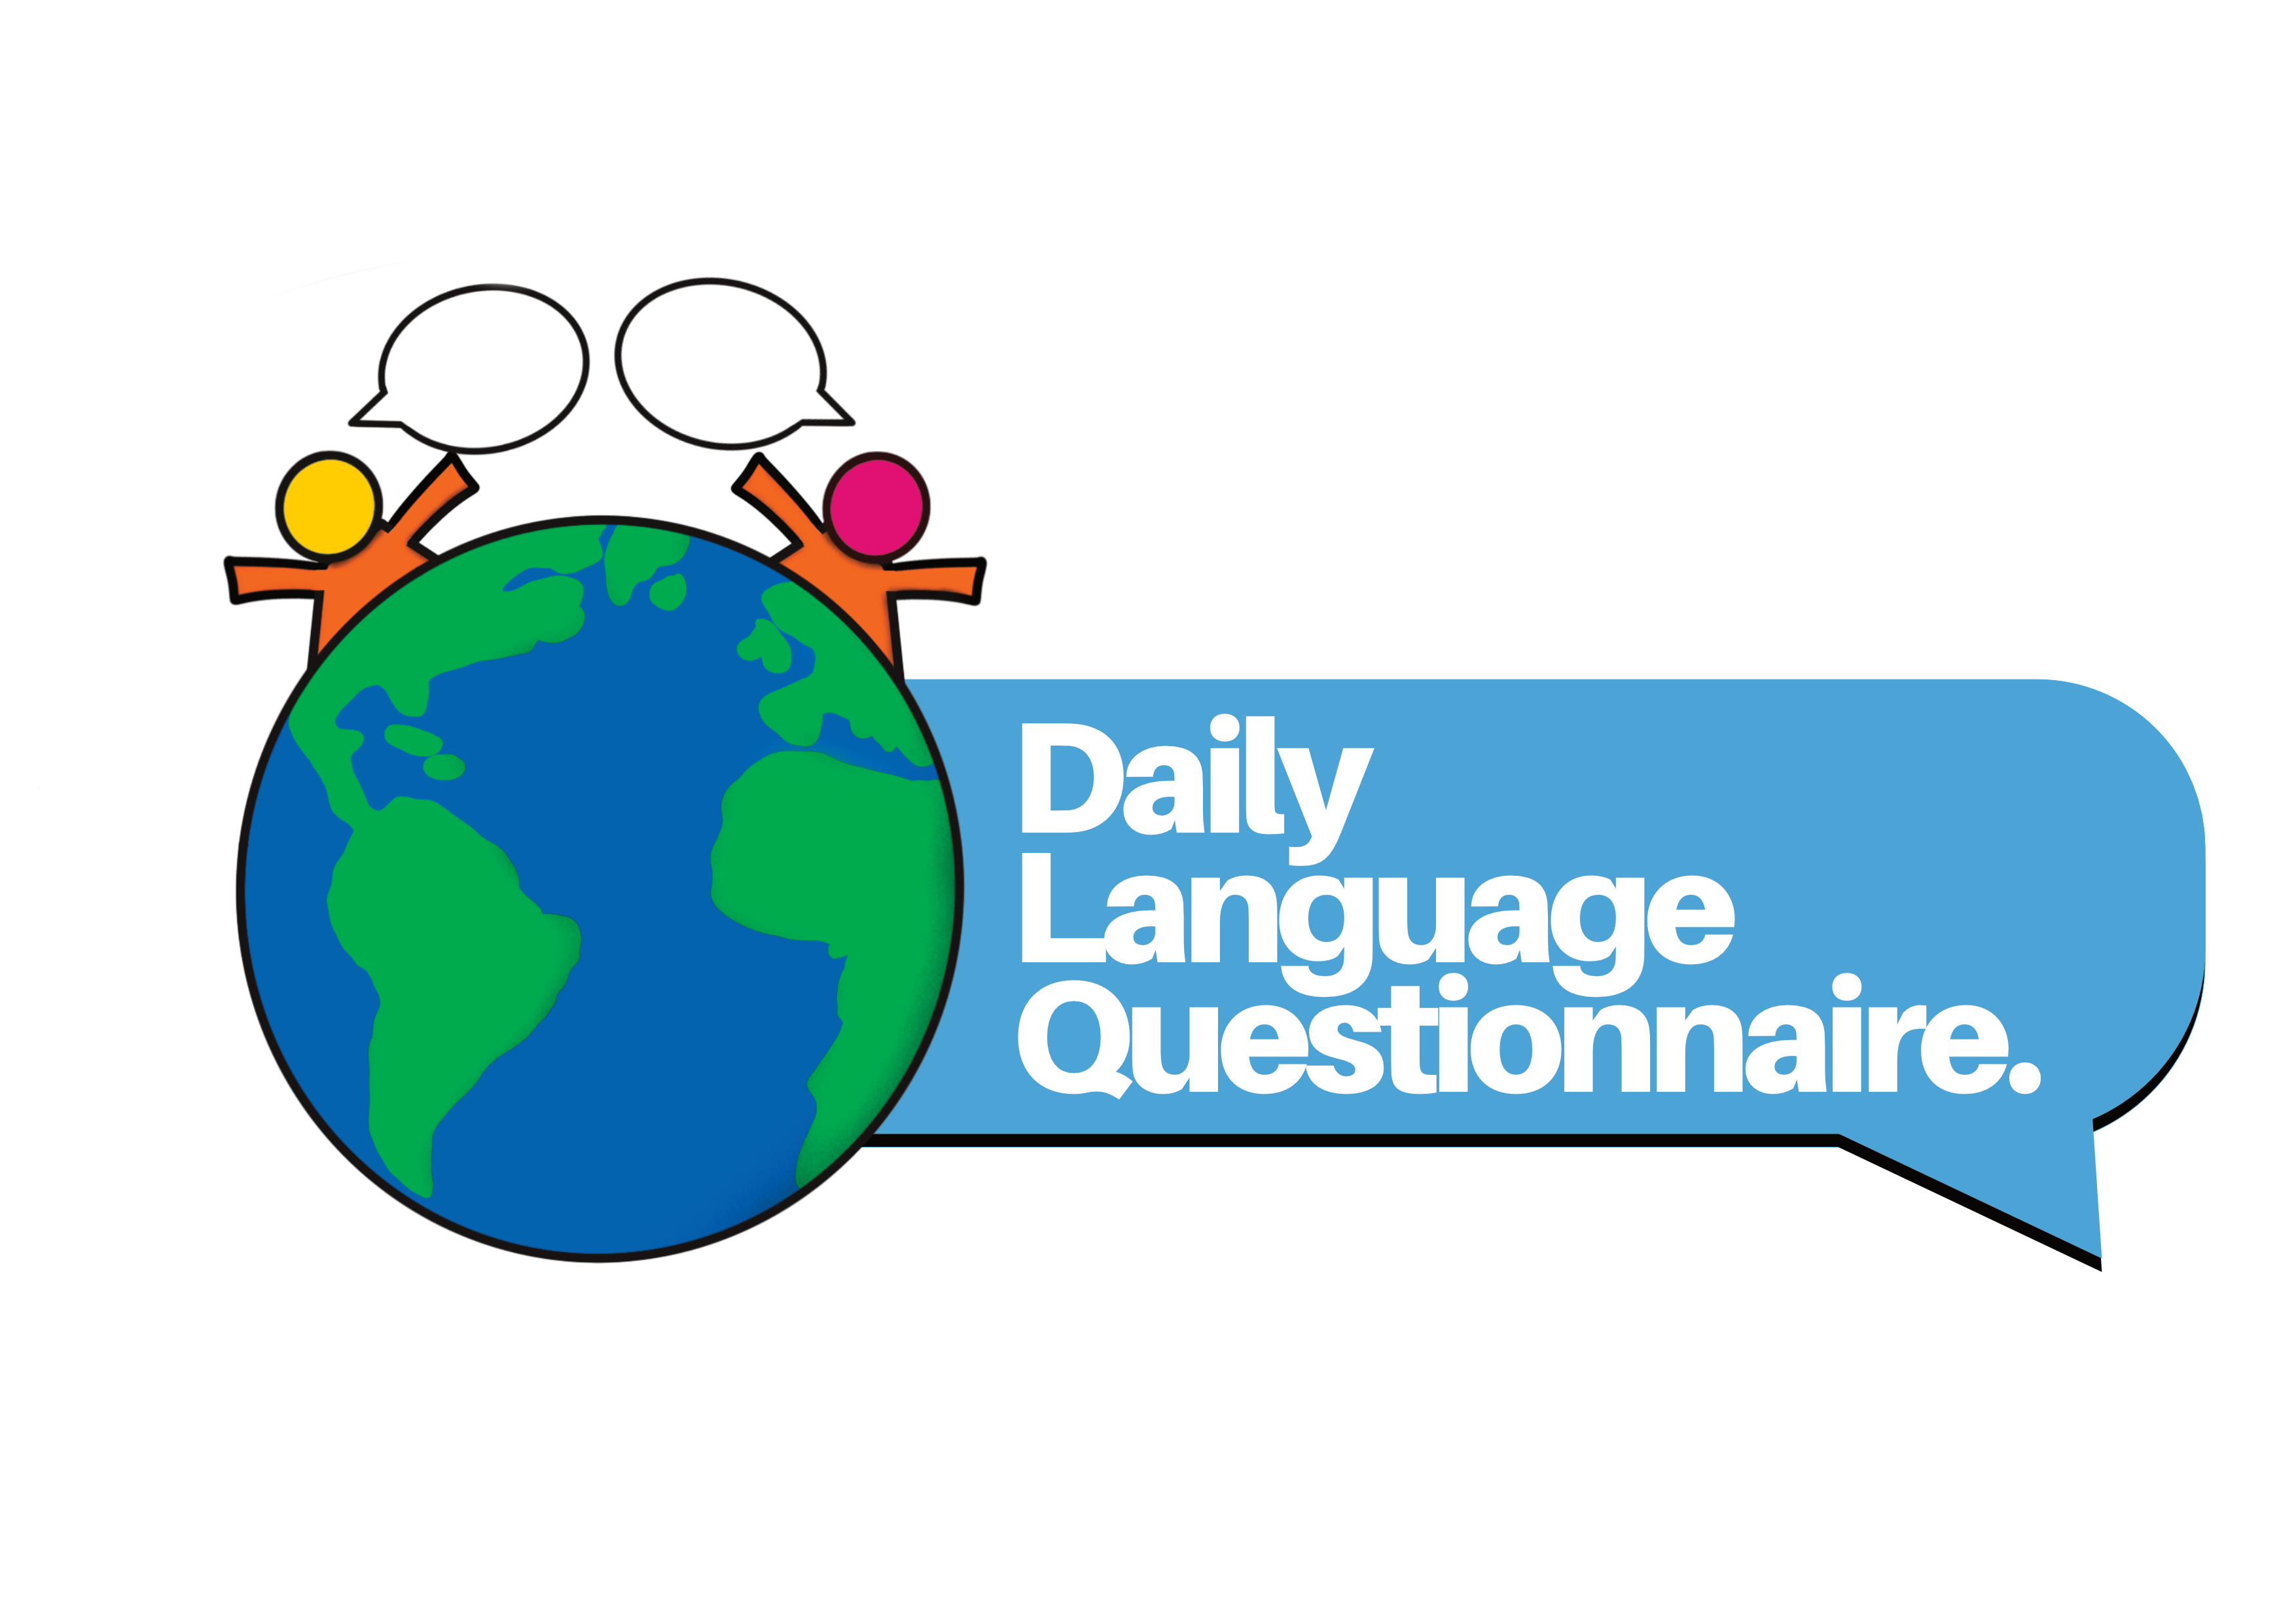 Daily Language Questionnaire logo